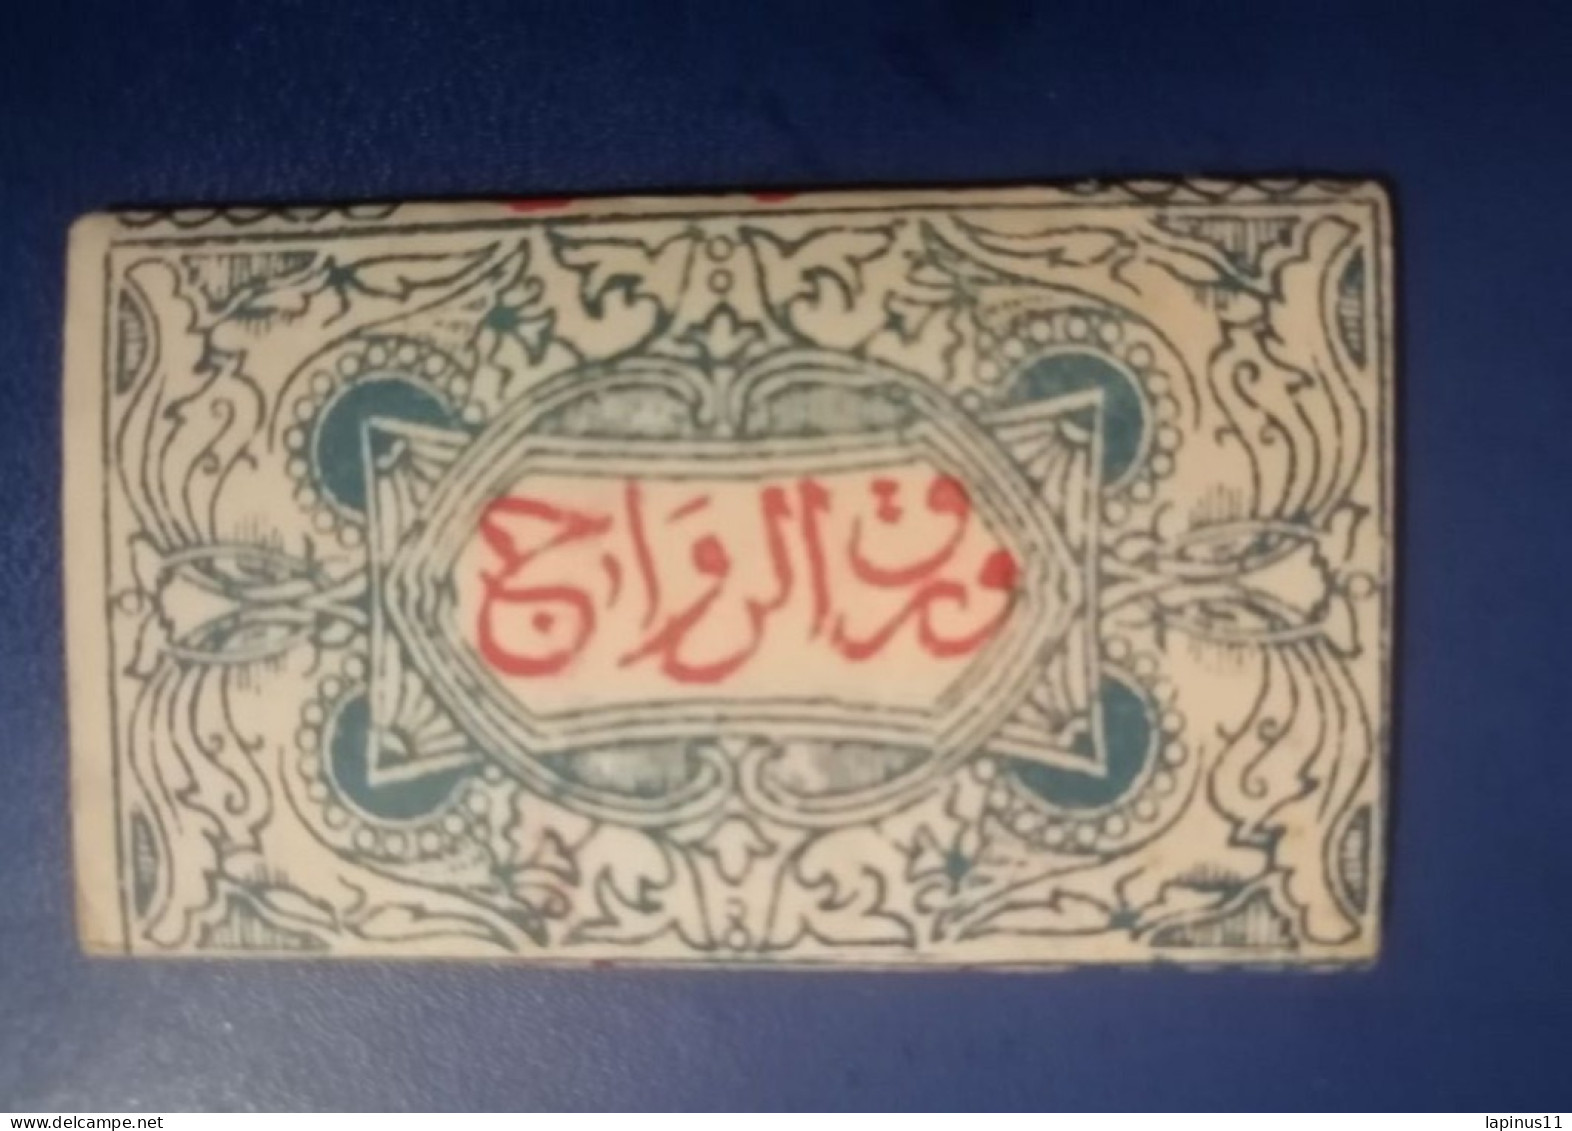 Papiers Tabac Period Ottoman RARE - Cigarette Holders